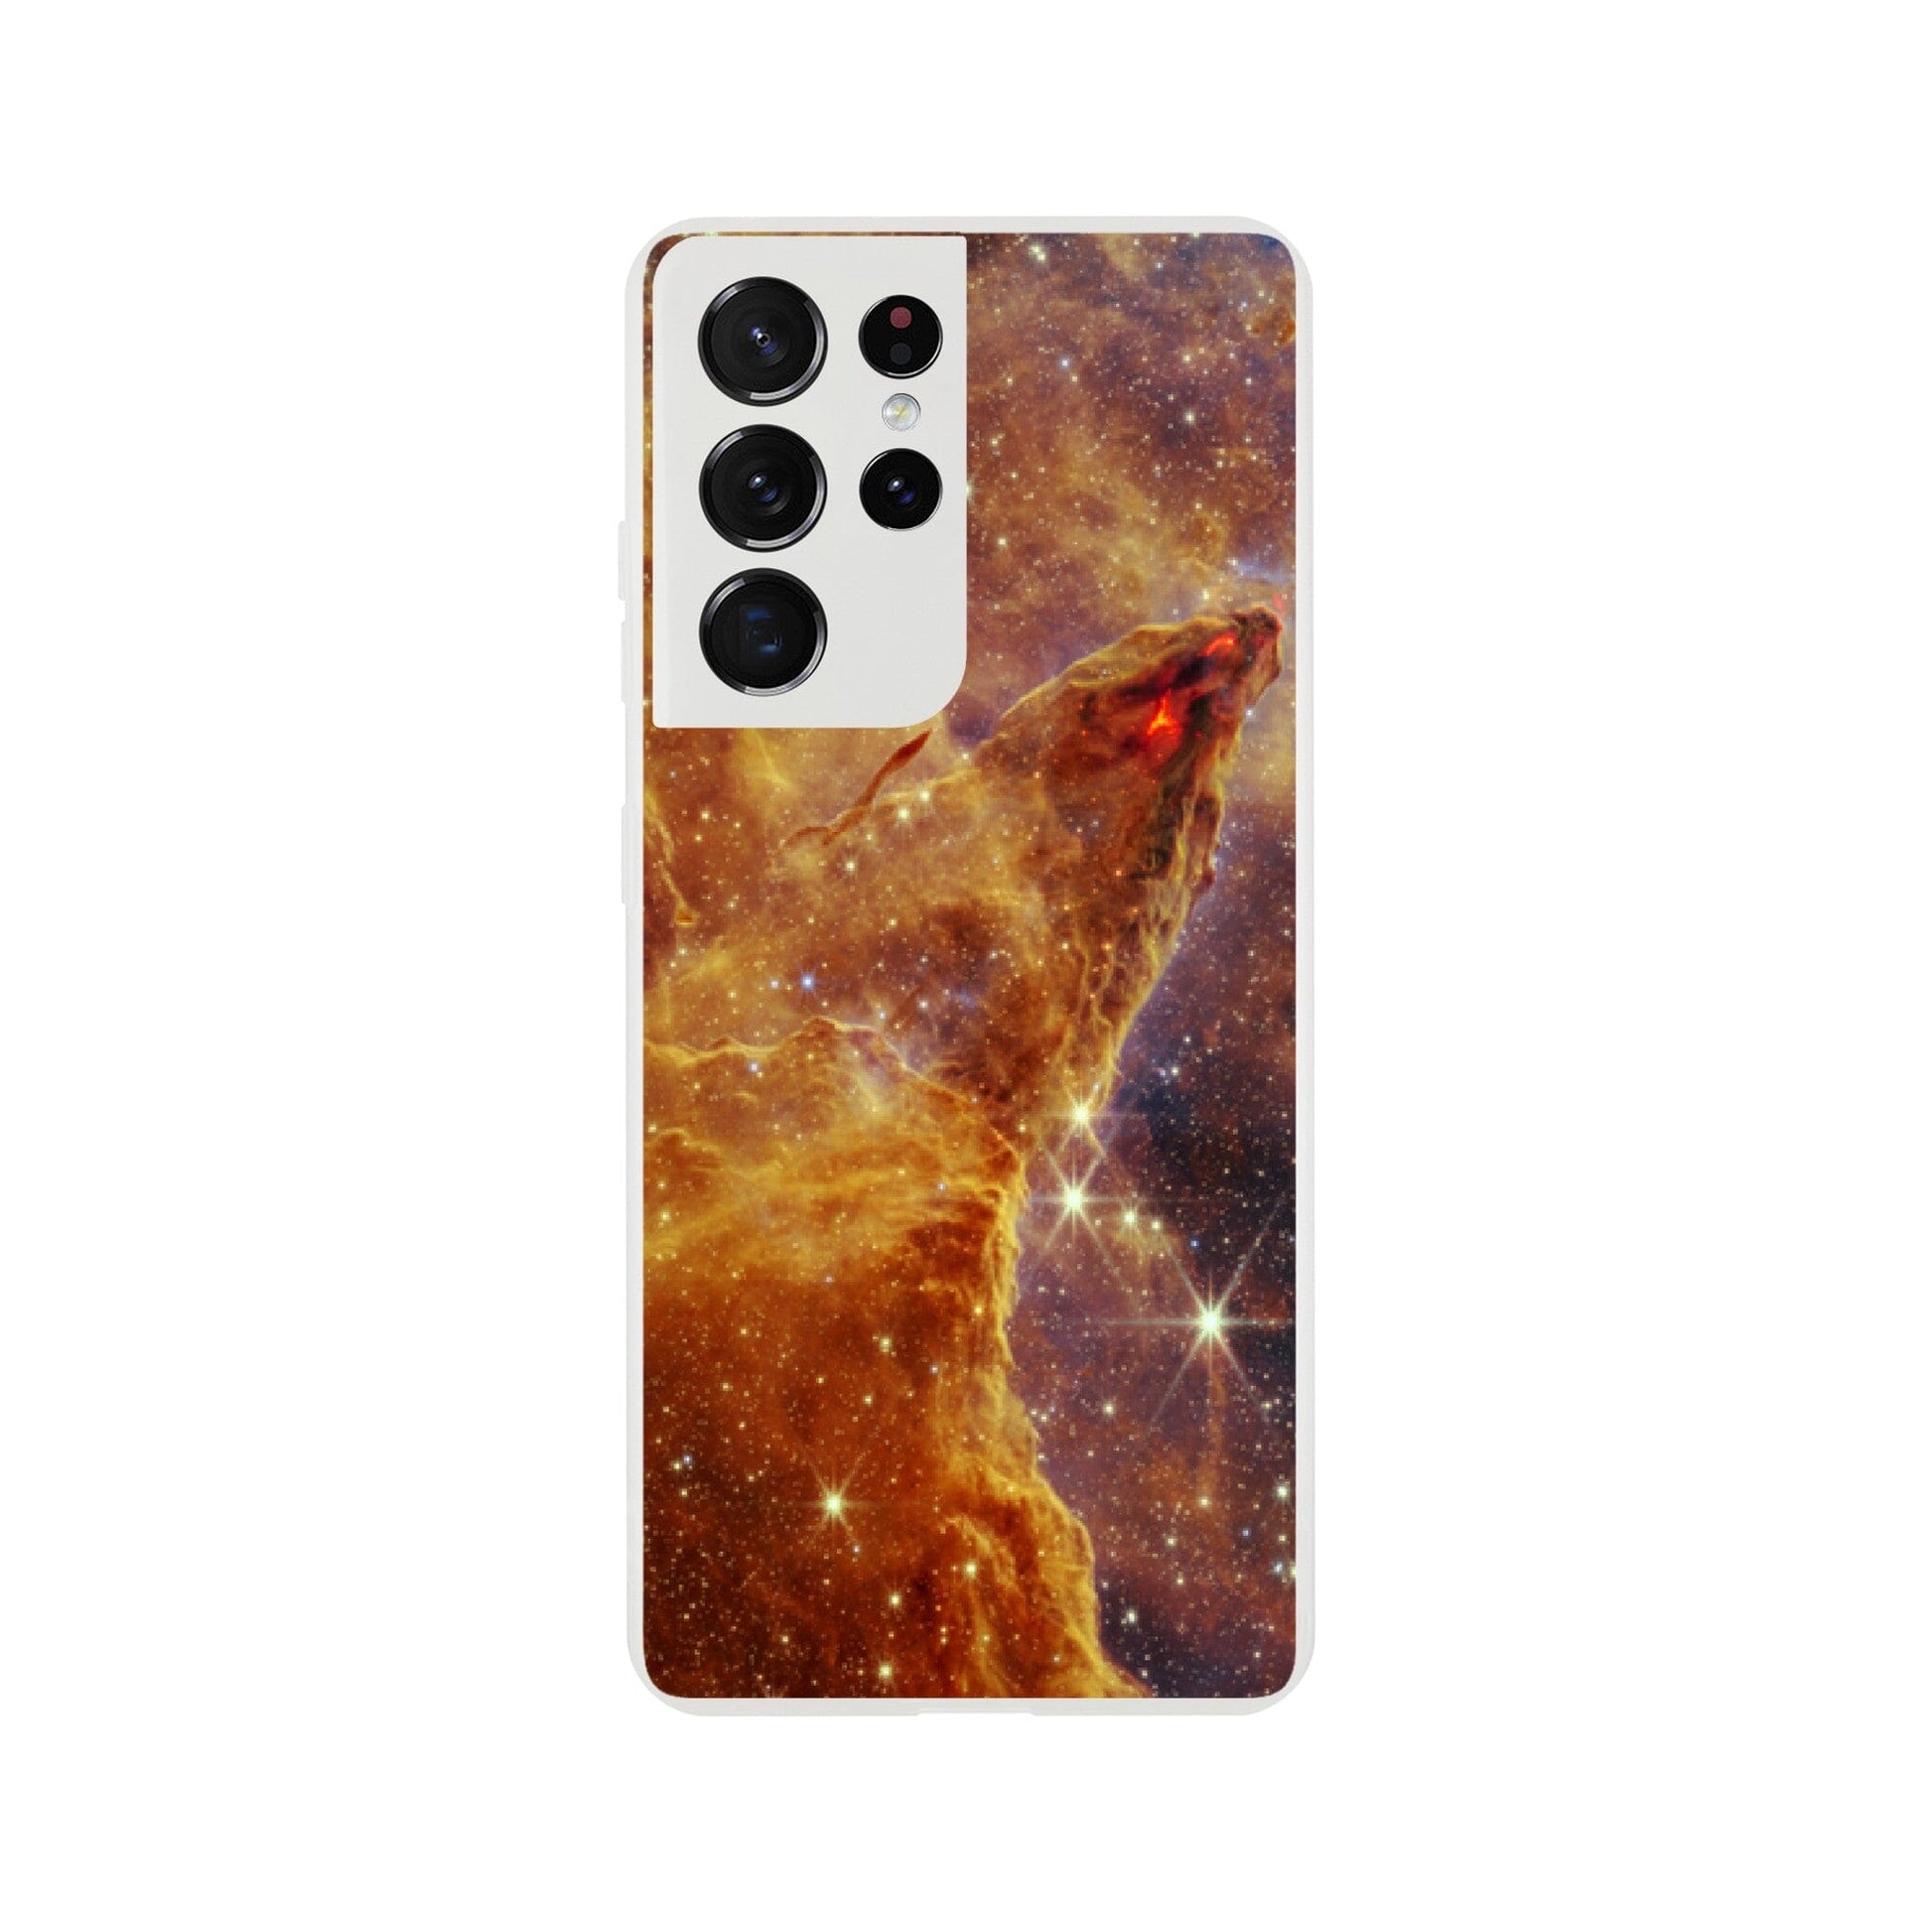 NASA - Phone Case Flexi - 9. Pillars of Creation (NIRCam Image) - James Webb Space Telescope Phone Case TP Aviation Art Galaxy S21 Ultra 